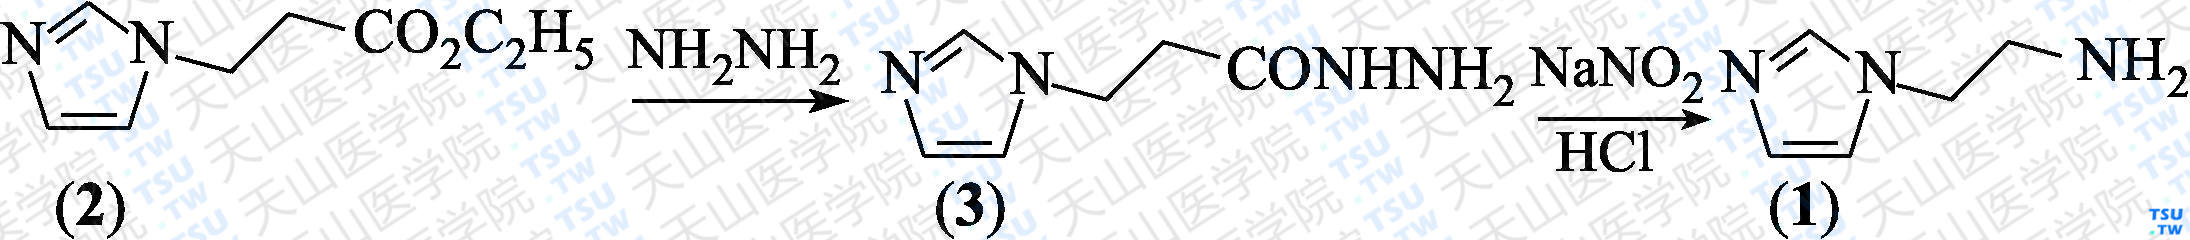 2-（1-咪唑基）乙胺（分子式：C<sub>5</sub>H<sub>9</sub>N<sub>3</sub>）的合成方法路线及其结构式